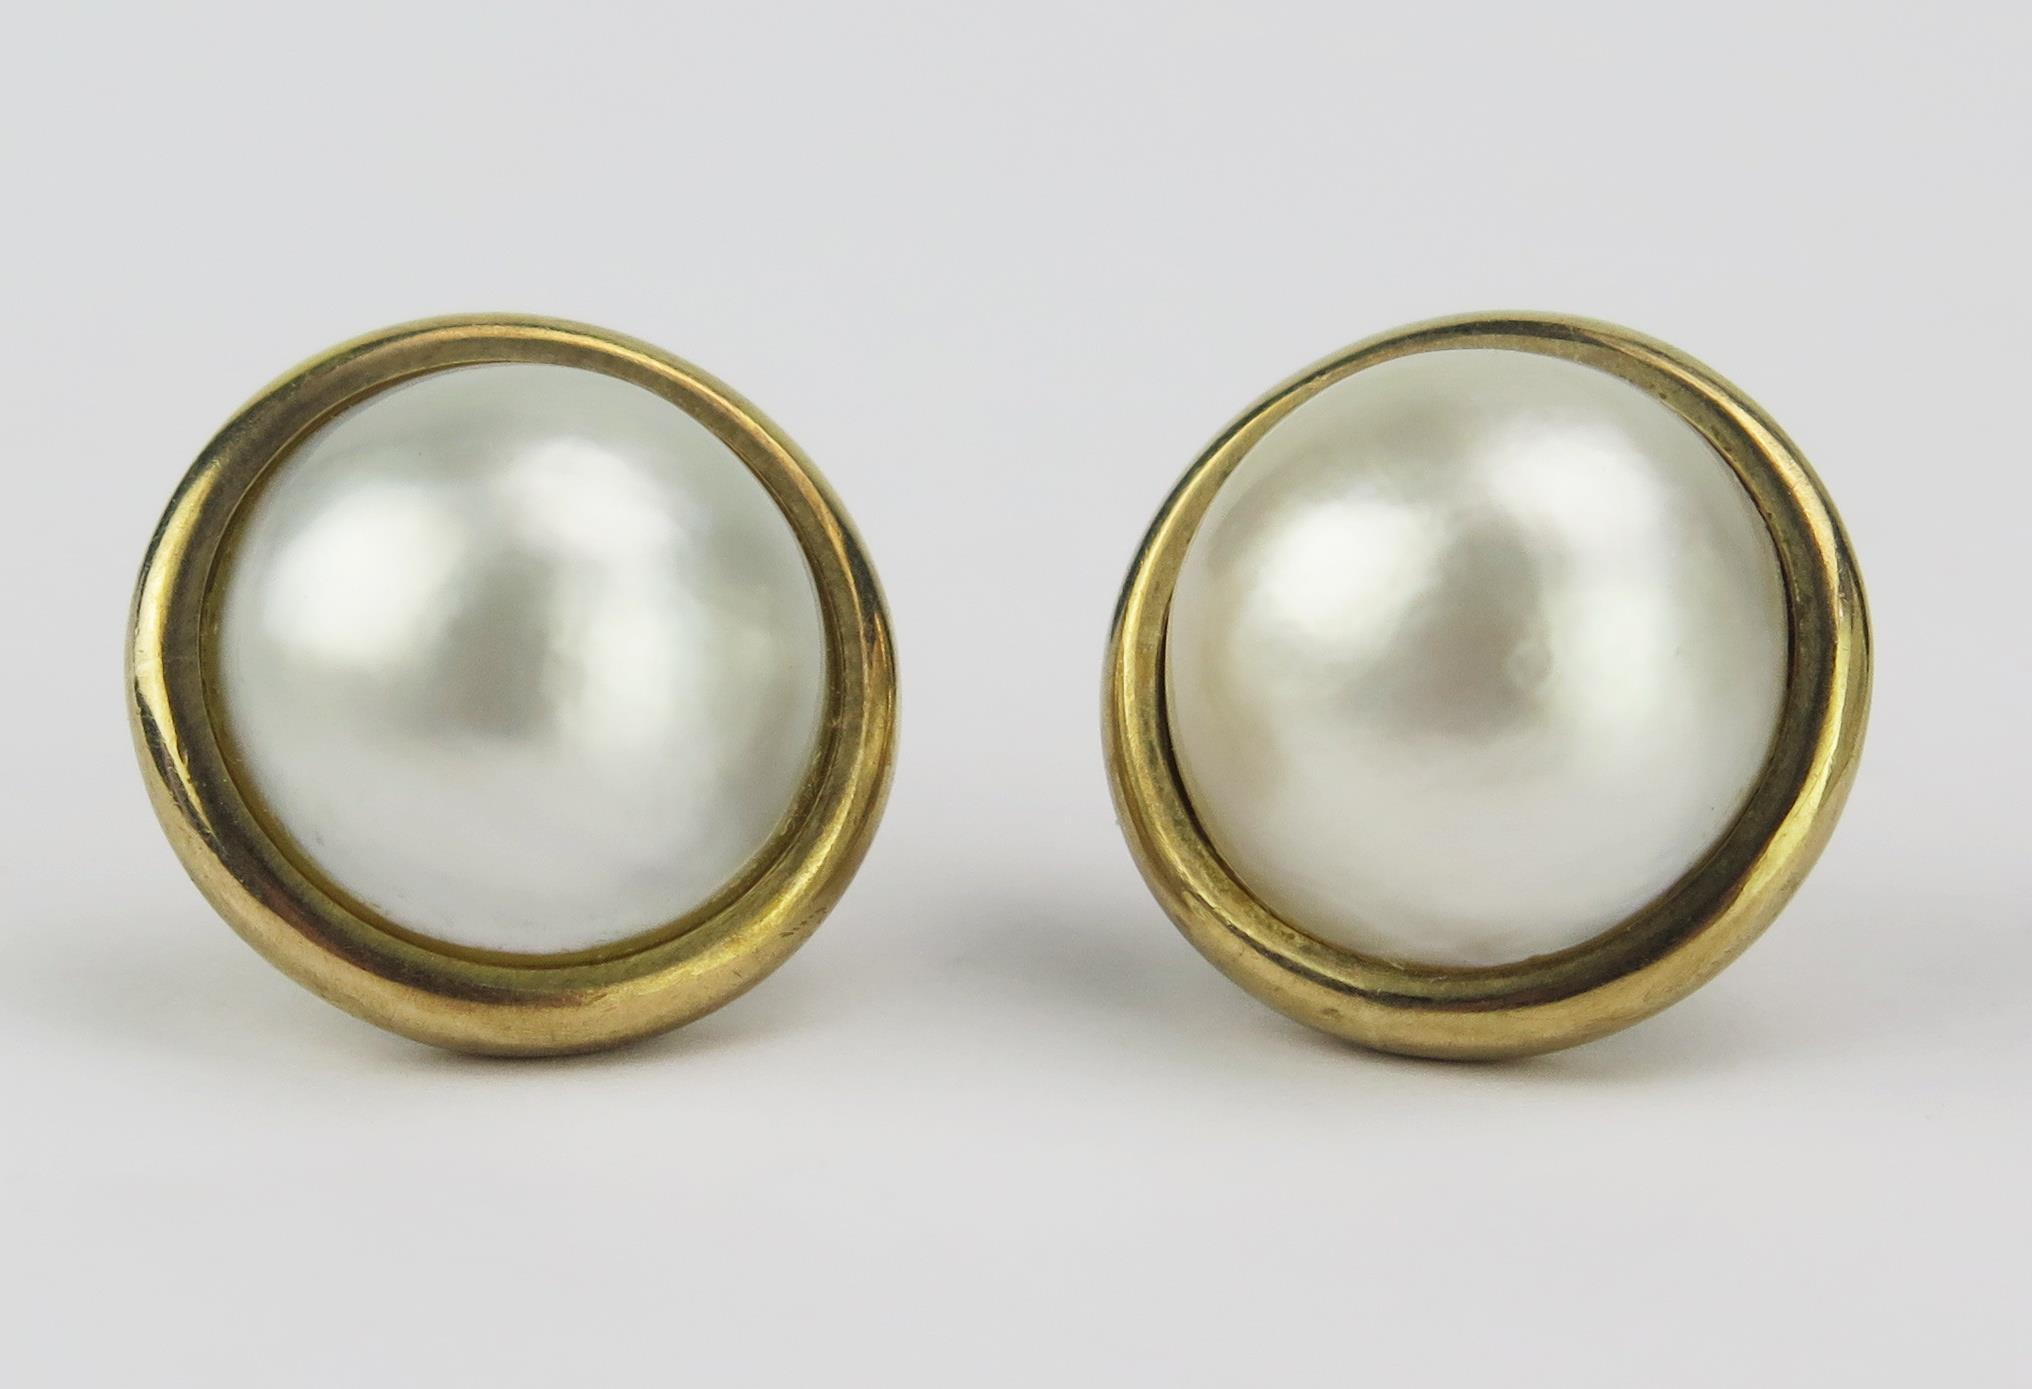 A Pair of 9ct Gold Baroque Pearl or Cultured Pearl Stud Earrings, 18.6mm diam., Birmingham